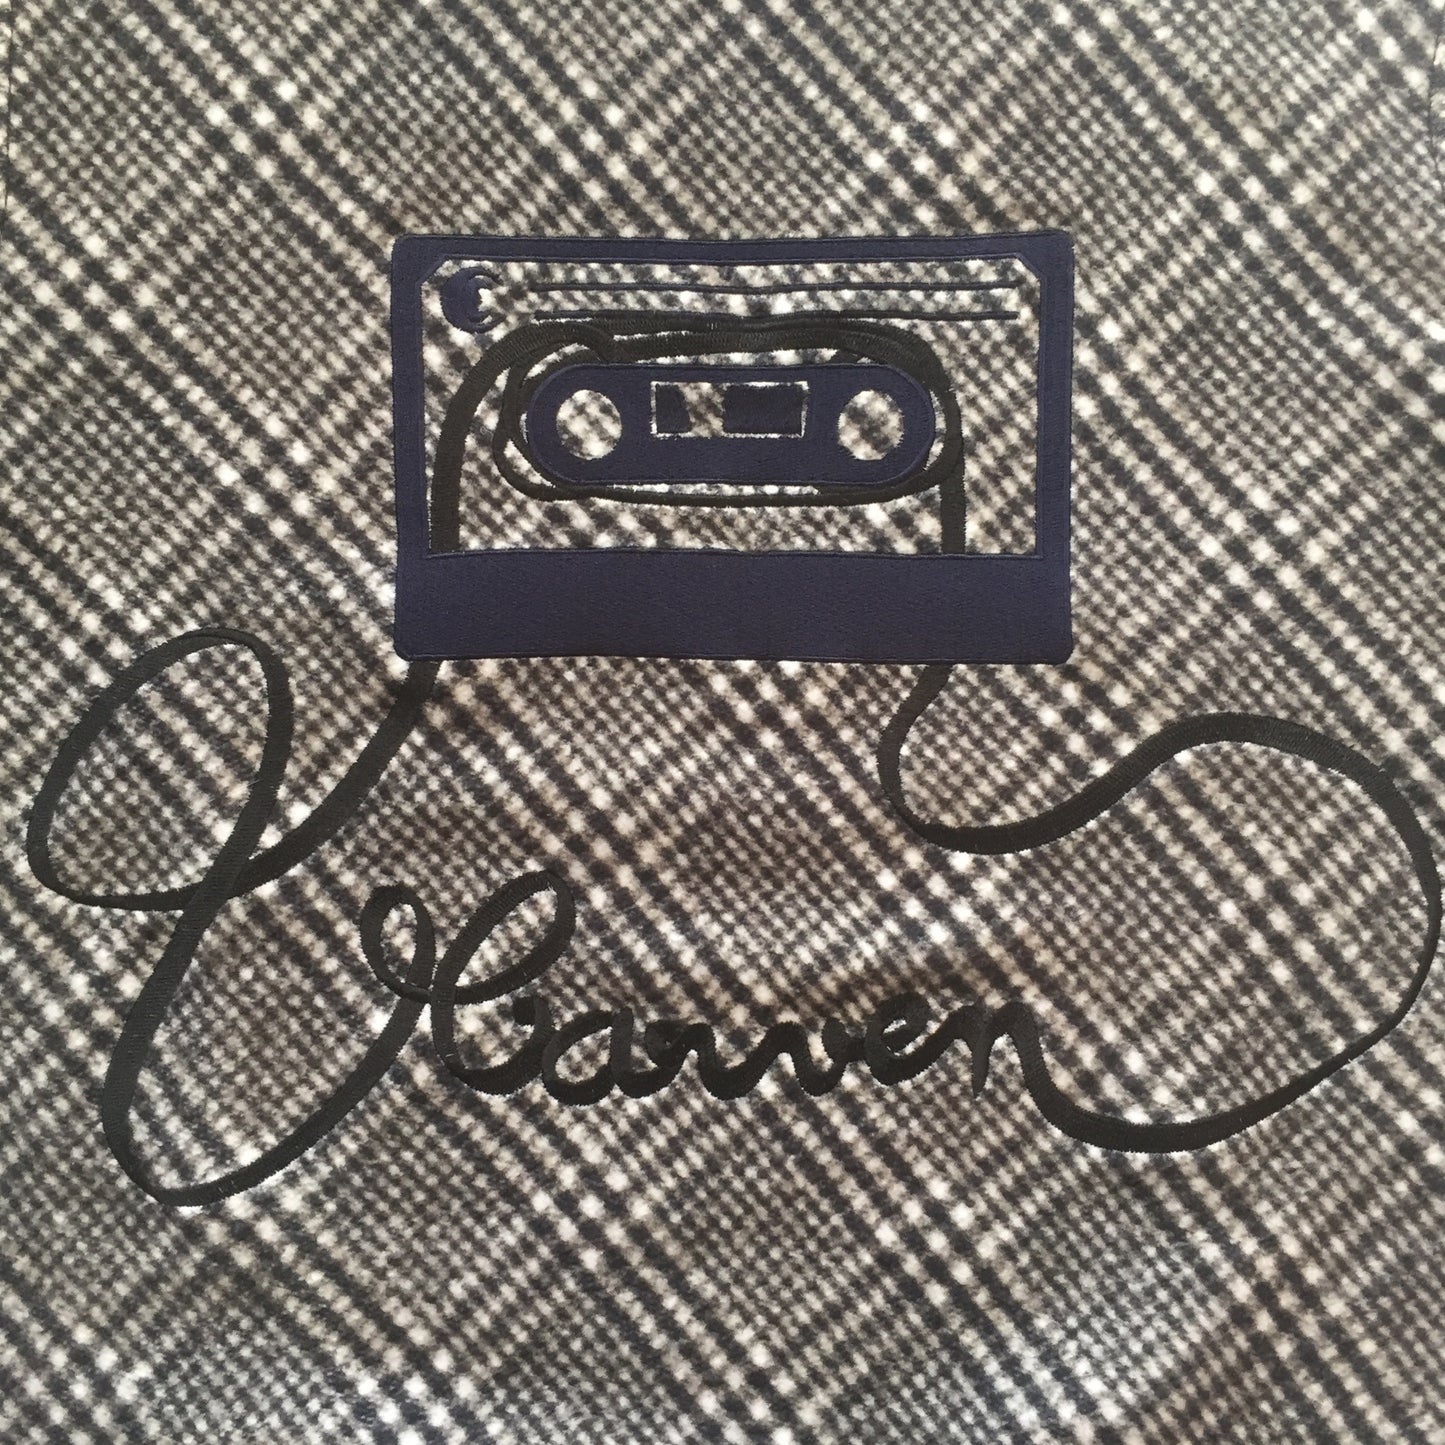 Carven - Tartan Tape Embroidered Sweatshirt